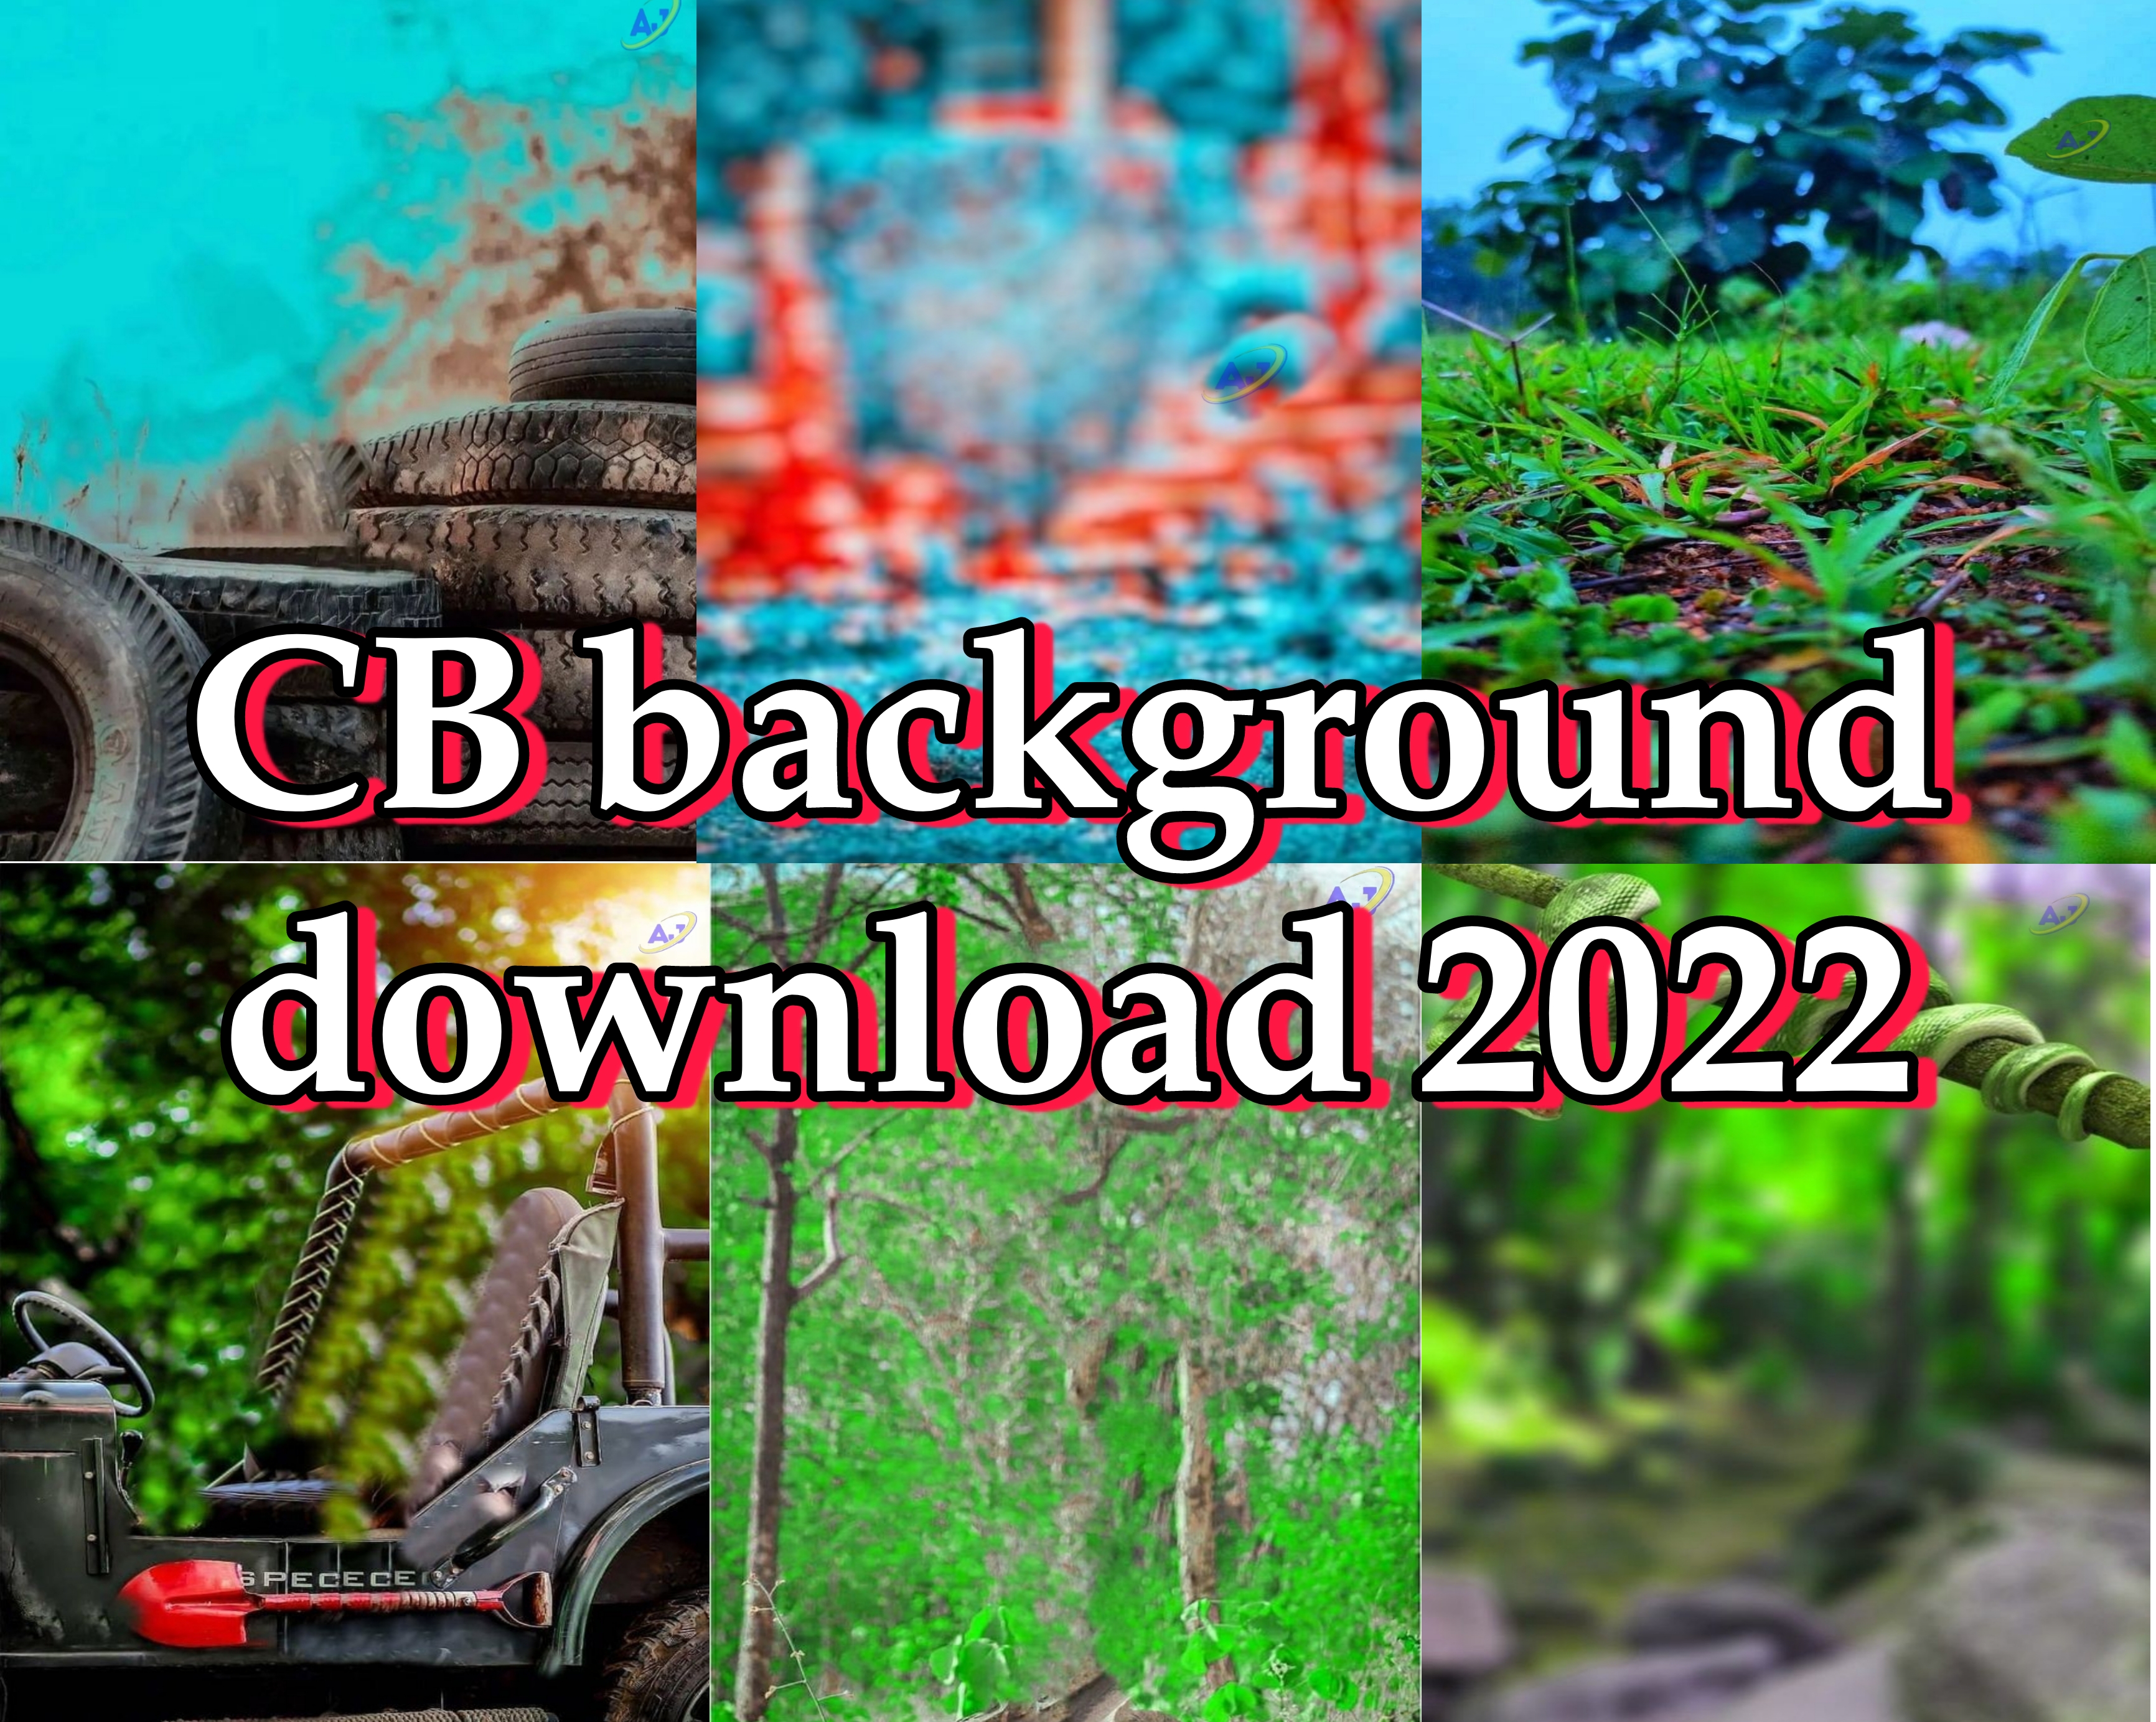 20+CB background download PicsArt 2022 | HD images HD | lightroom preset free download 2022